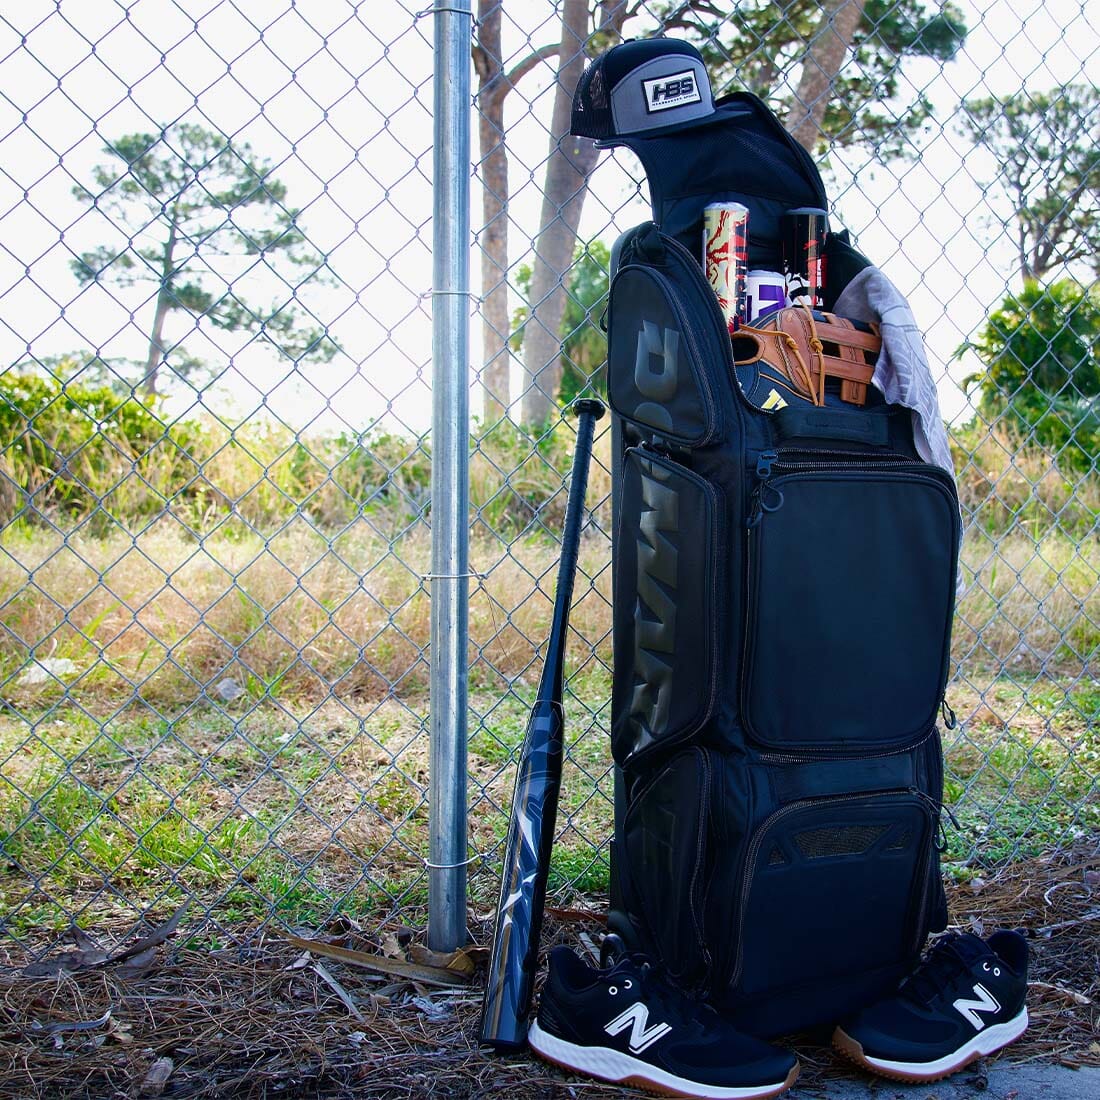 DeMarini Momentum Wheeled Catcher Player Gear Bag 2.0 Baseball Softball |  eBay